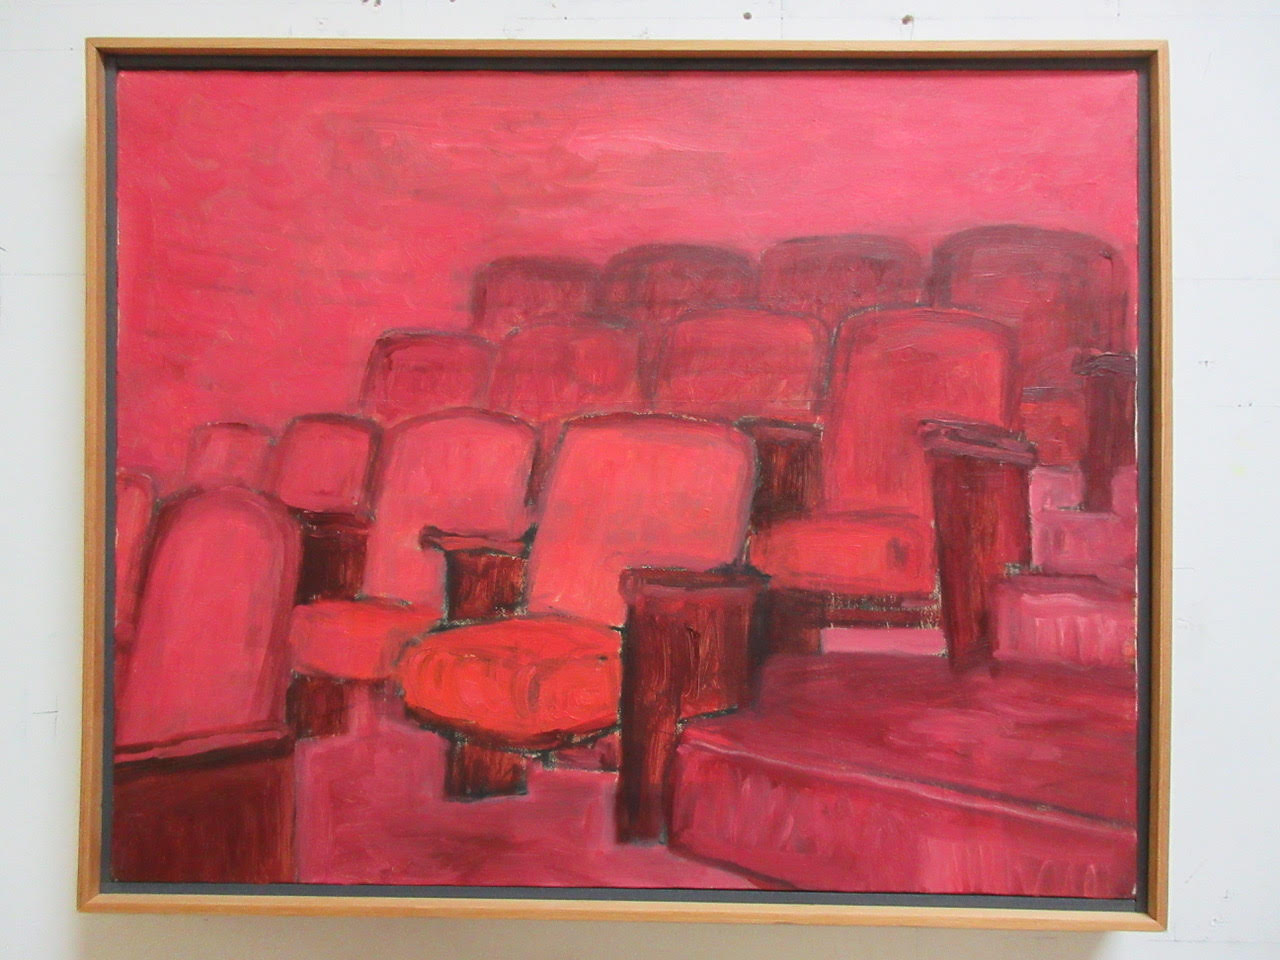 Yoichiro Yoda, "Harem Theater Seats"